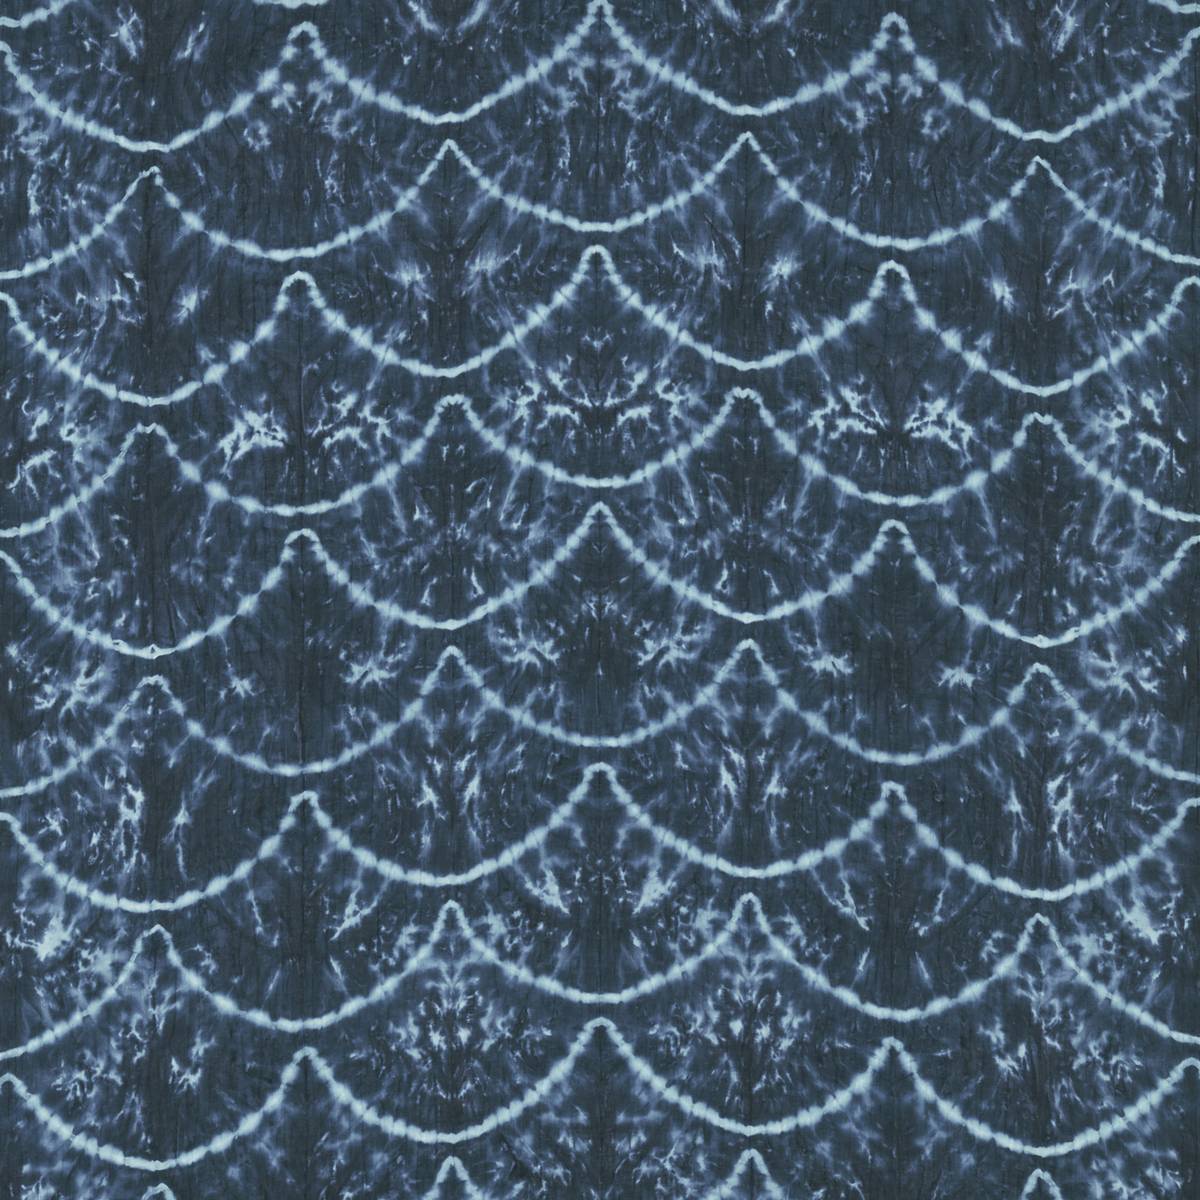 Molokai Ocean Fabric by Harlequin